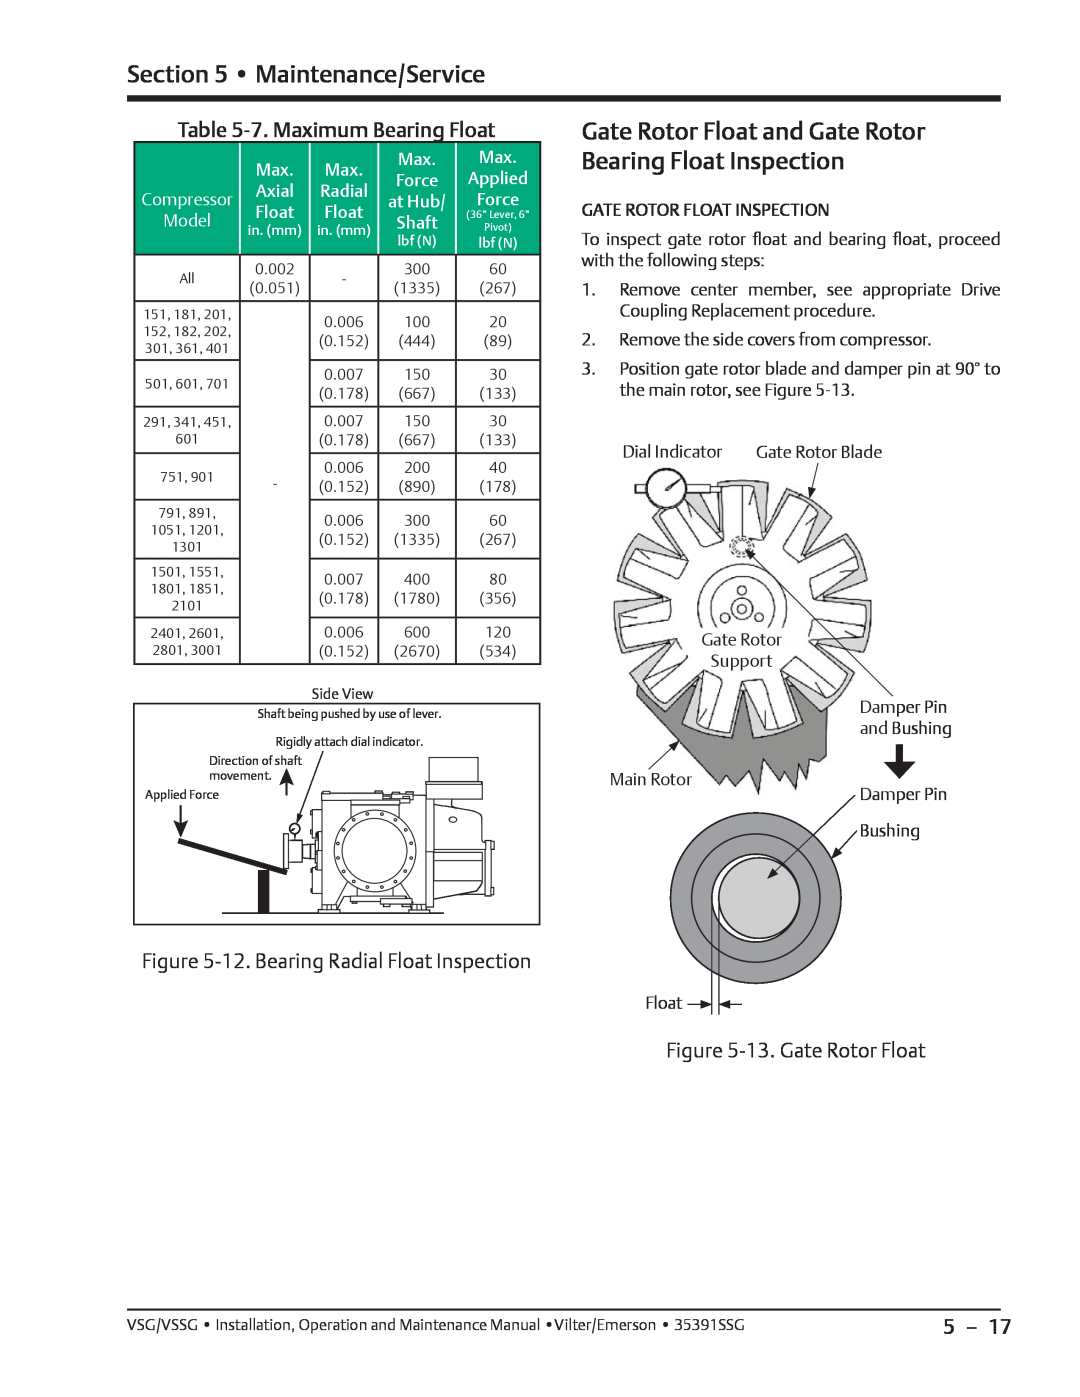 Emerson VSG, VSSG Gate Rotor Float and Gate Rotor Bearing Float Inspection, 7. Maximum Bearing Float, 13. Gate Rotor Float 